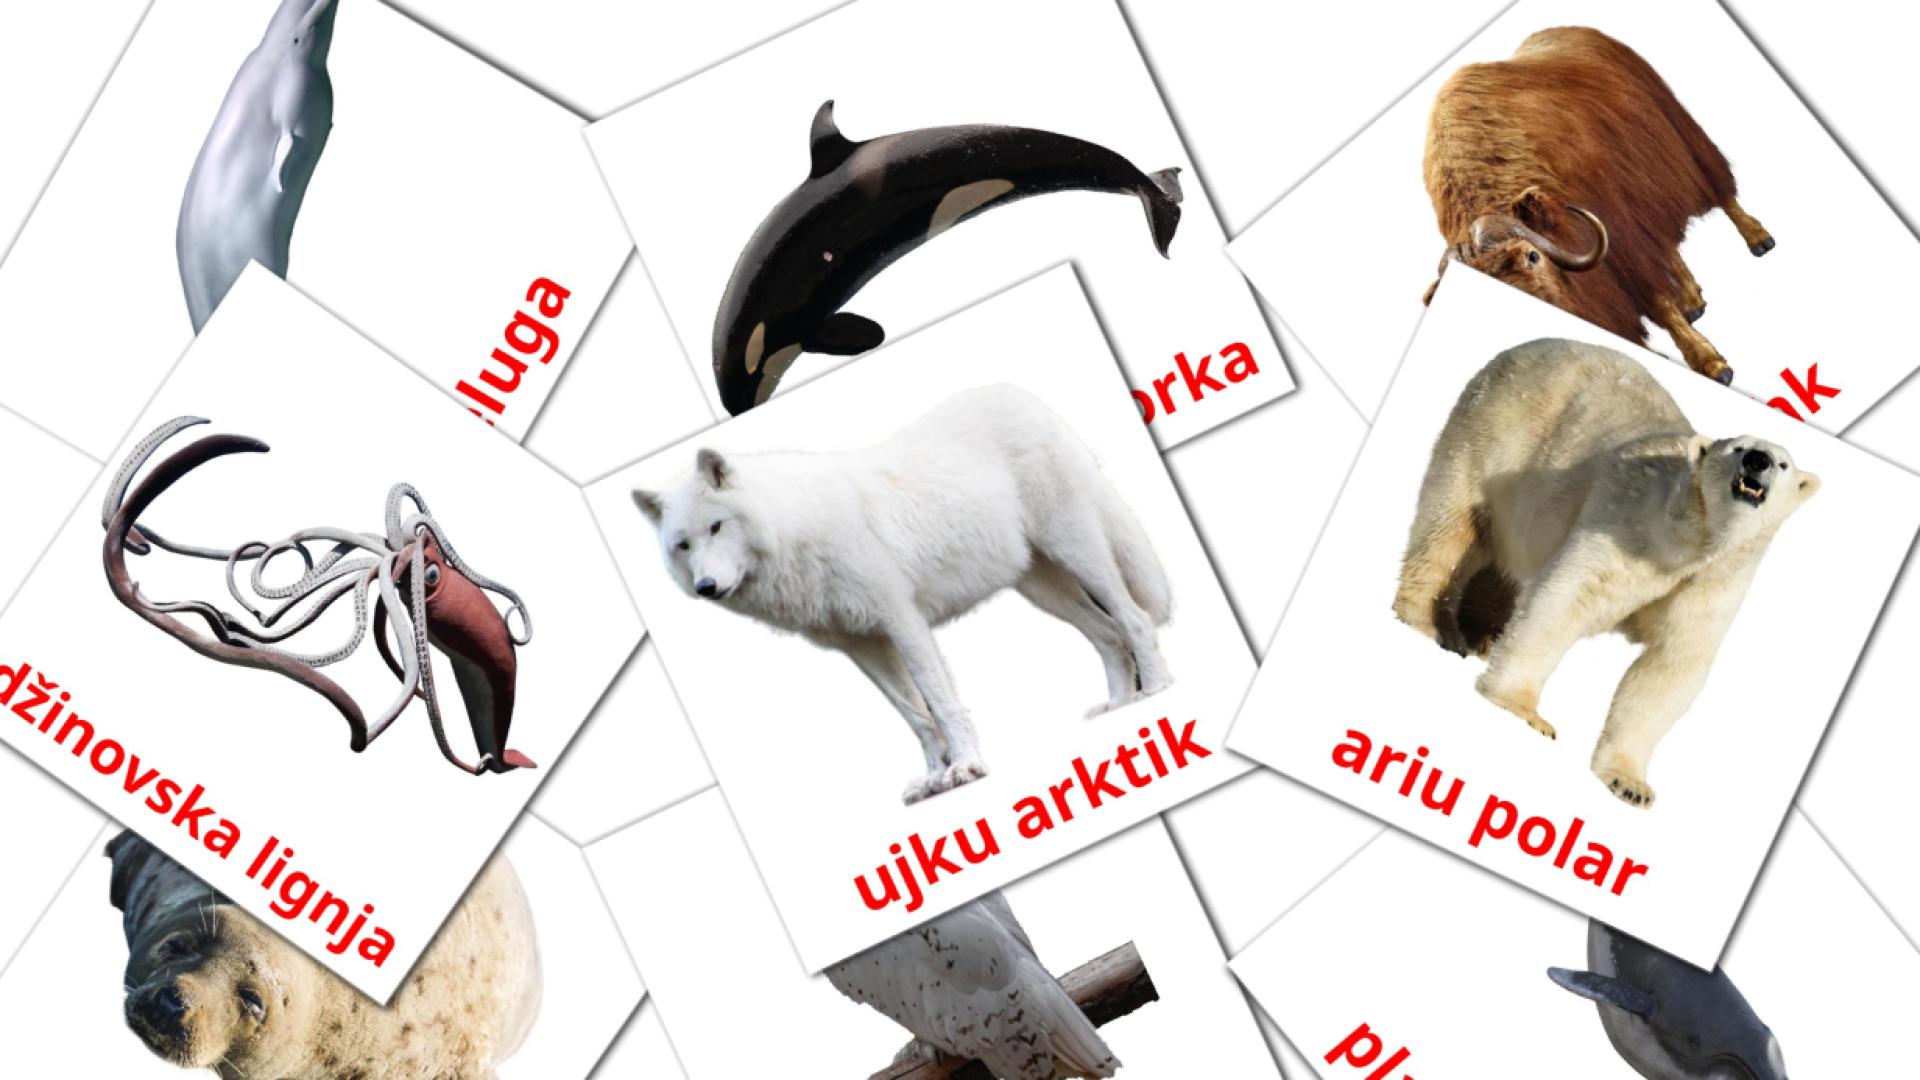 Tiere in der arktis - Albanisch Vokabelkarten